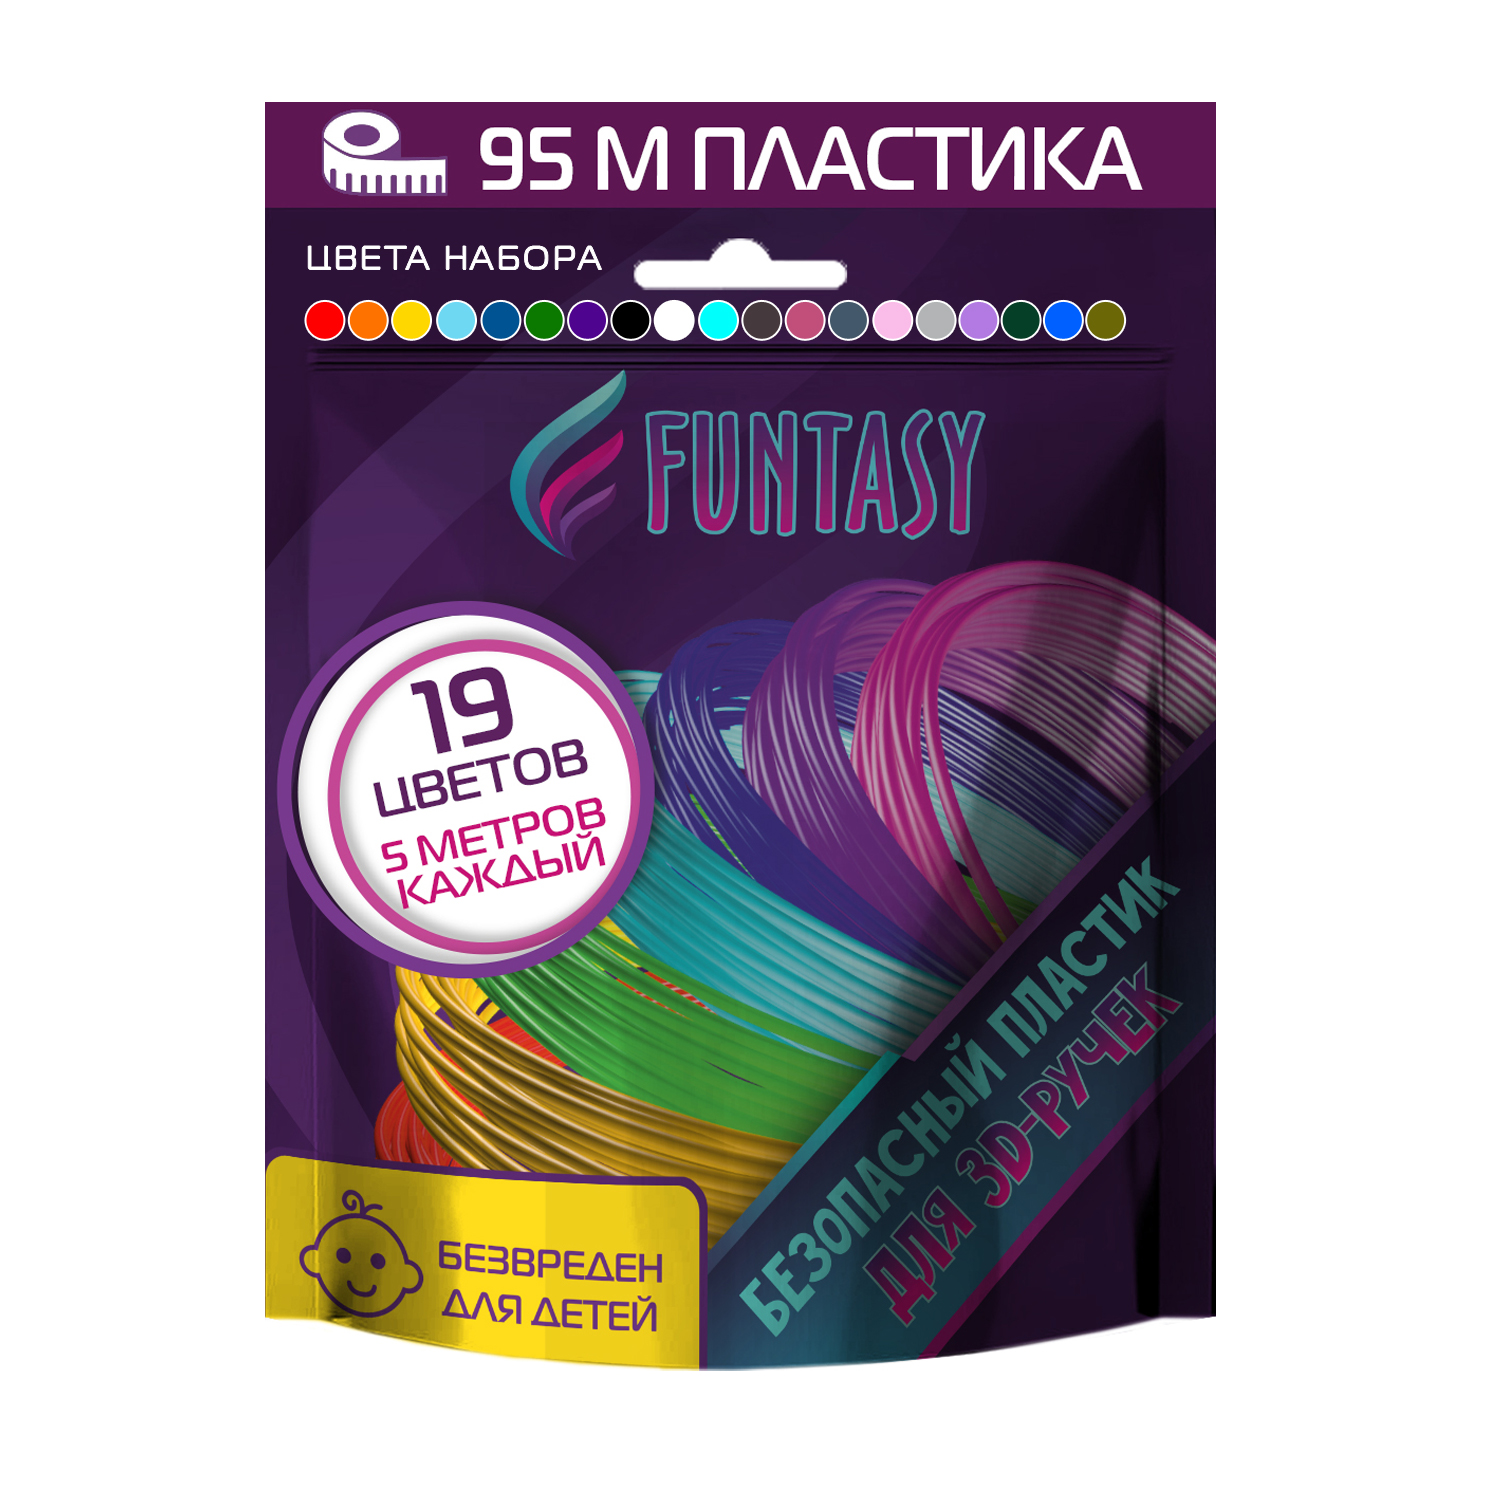 Пластик PLA для 3d ручки Funtasy 19 цветов по 5 метров - фото 1